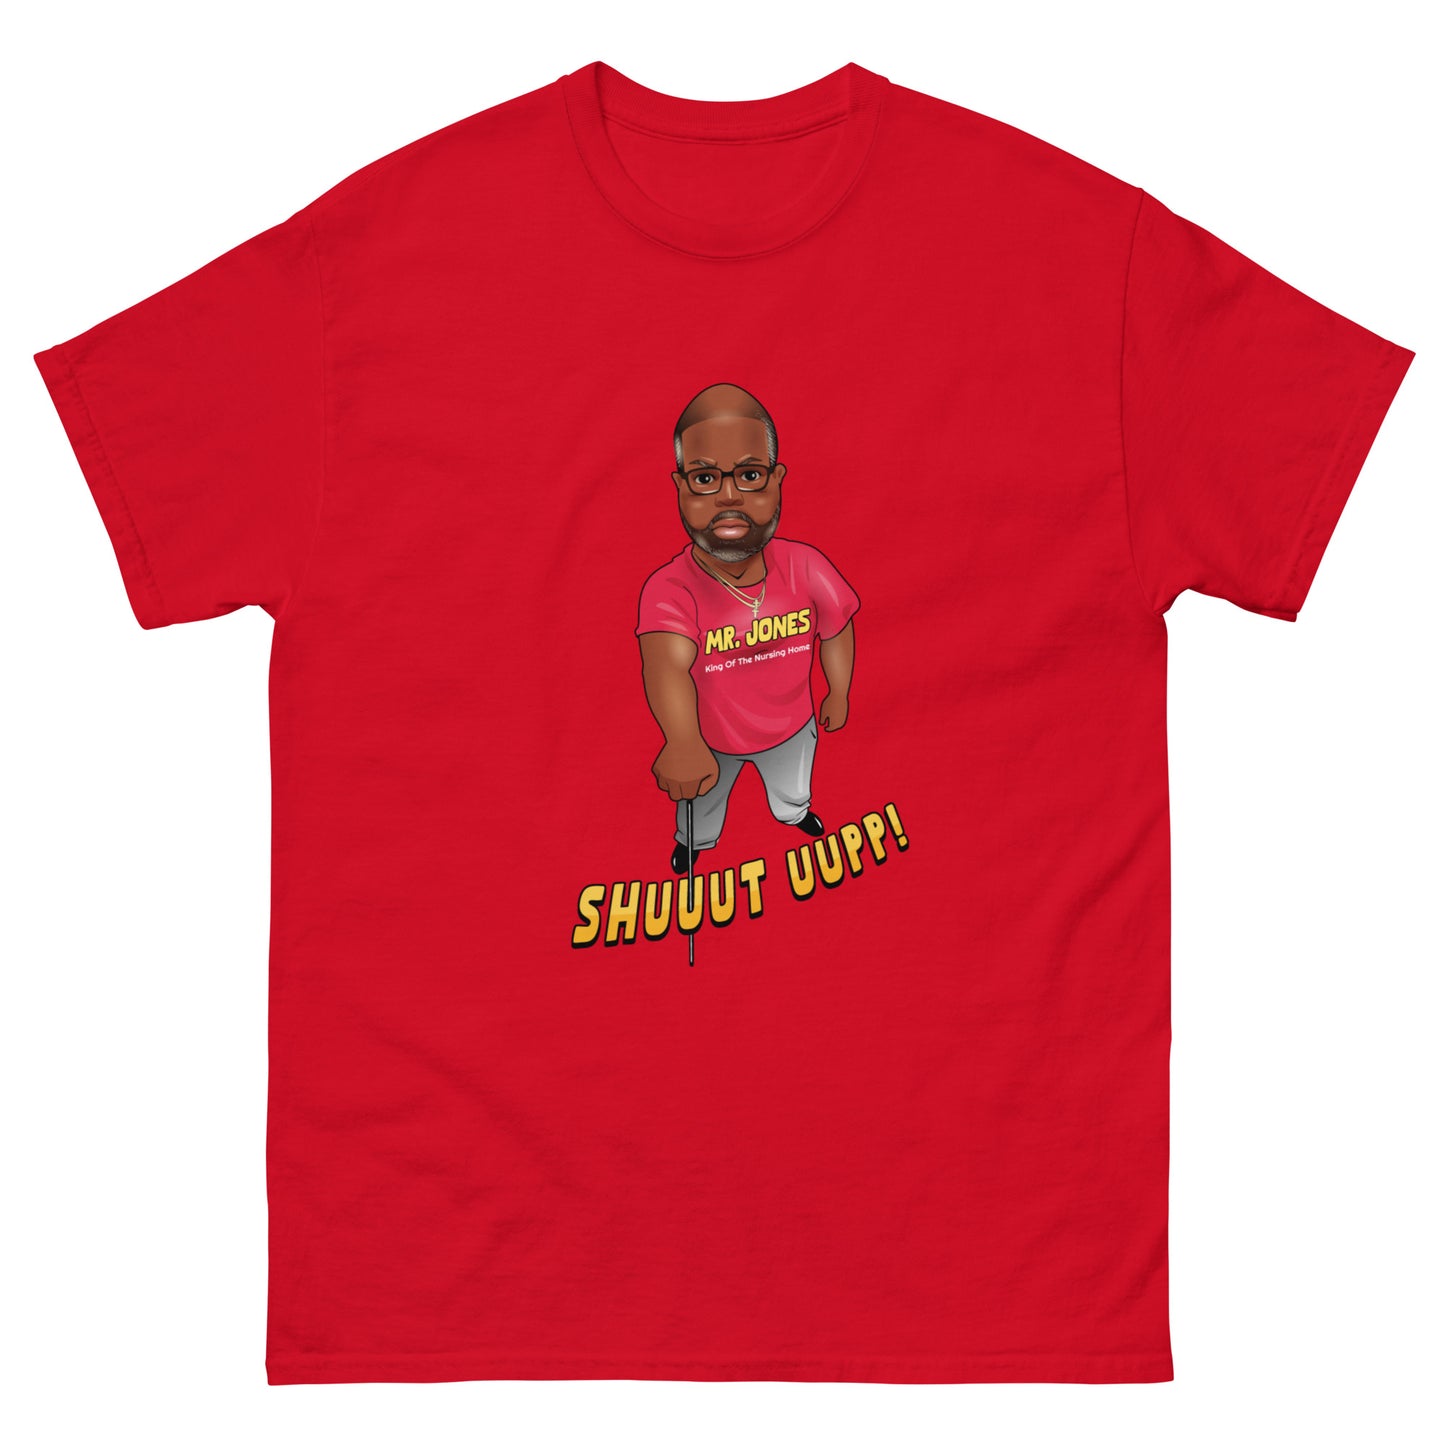 The "Mr. Jones Shuuut Uup!" Official T-Shirt